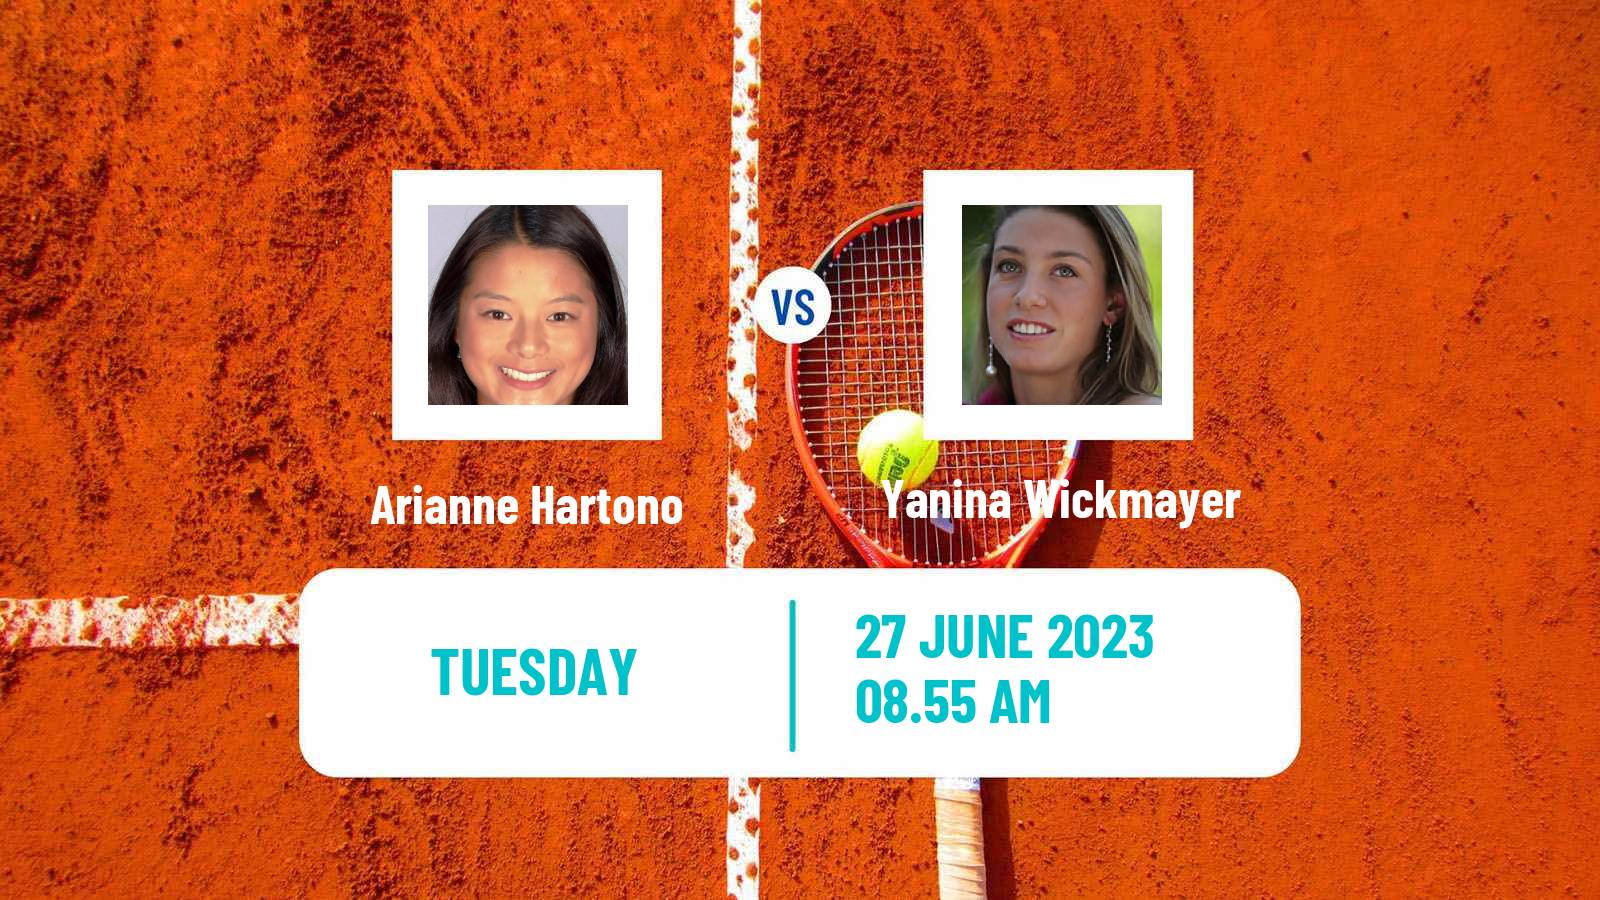 Tennis WTA Wimbledon Arianne Hartono - Yanina Wickmayer